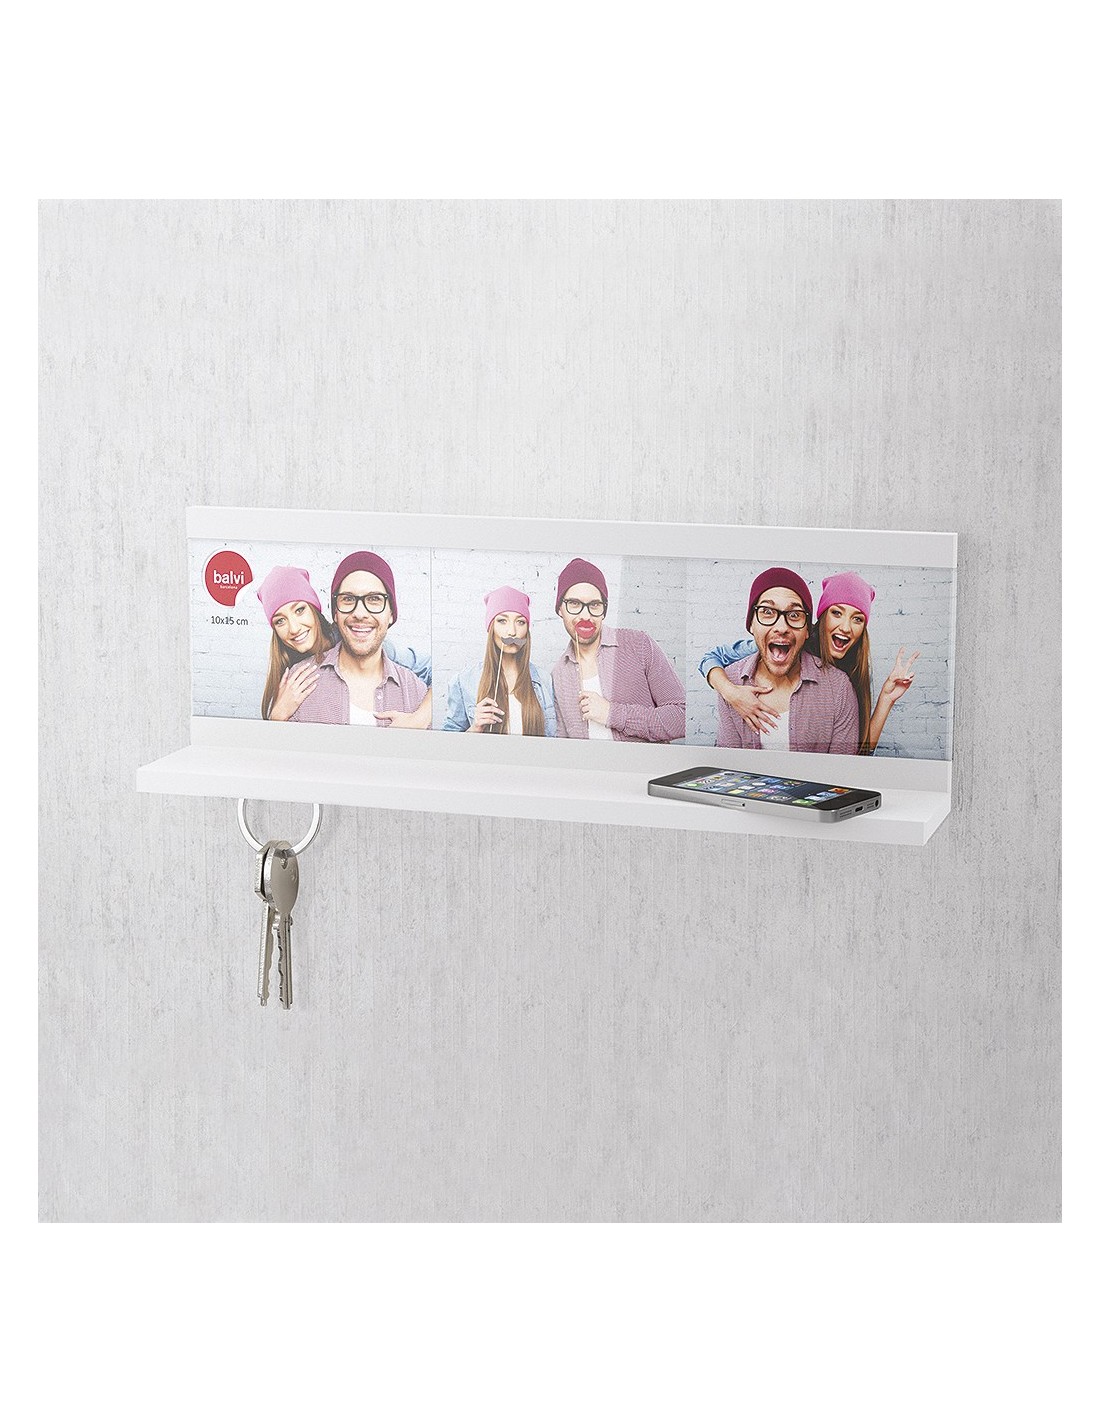 Portafoto mensola con portachiavi magnetici SHELFIE by BALVI│Balena Design